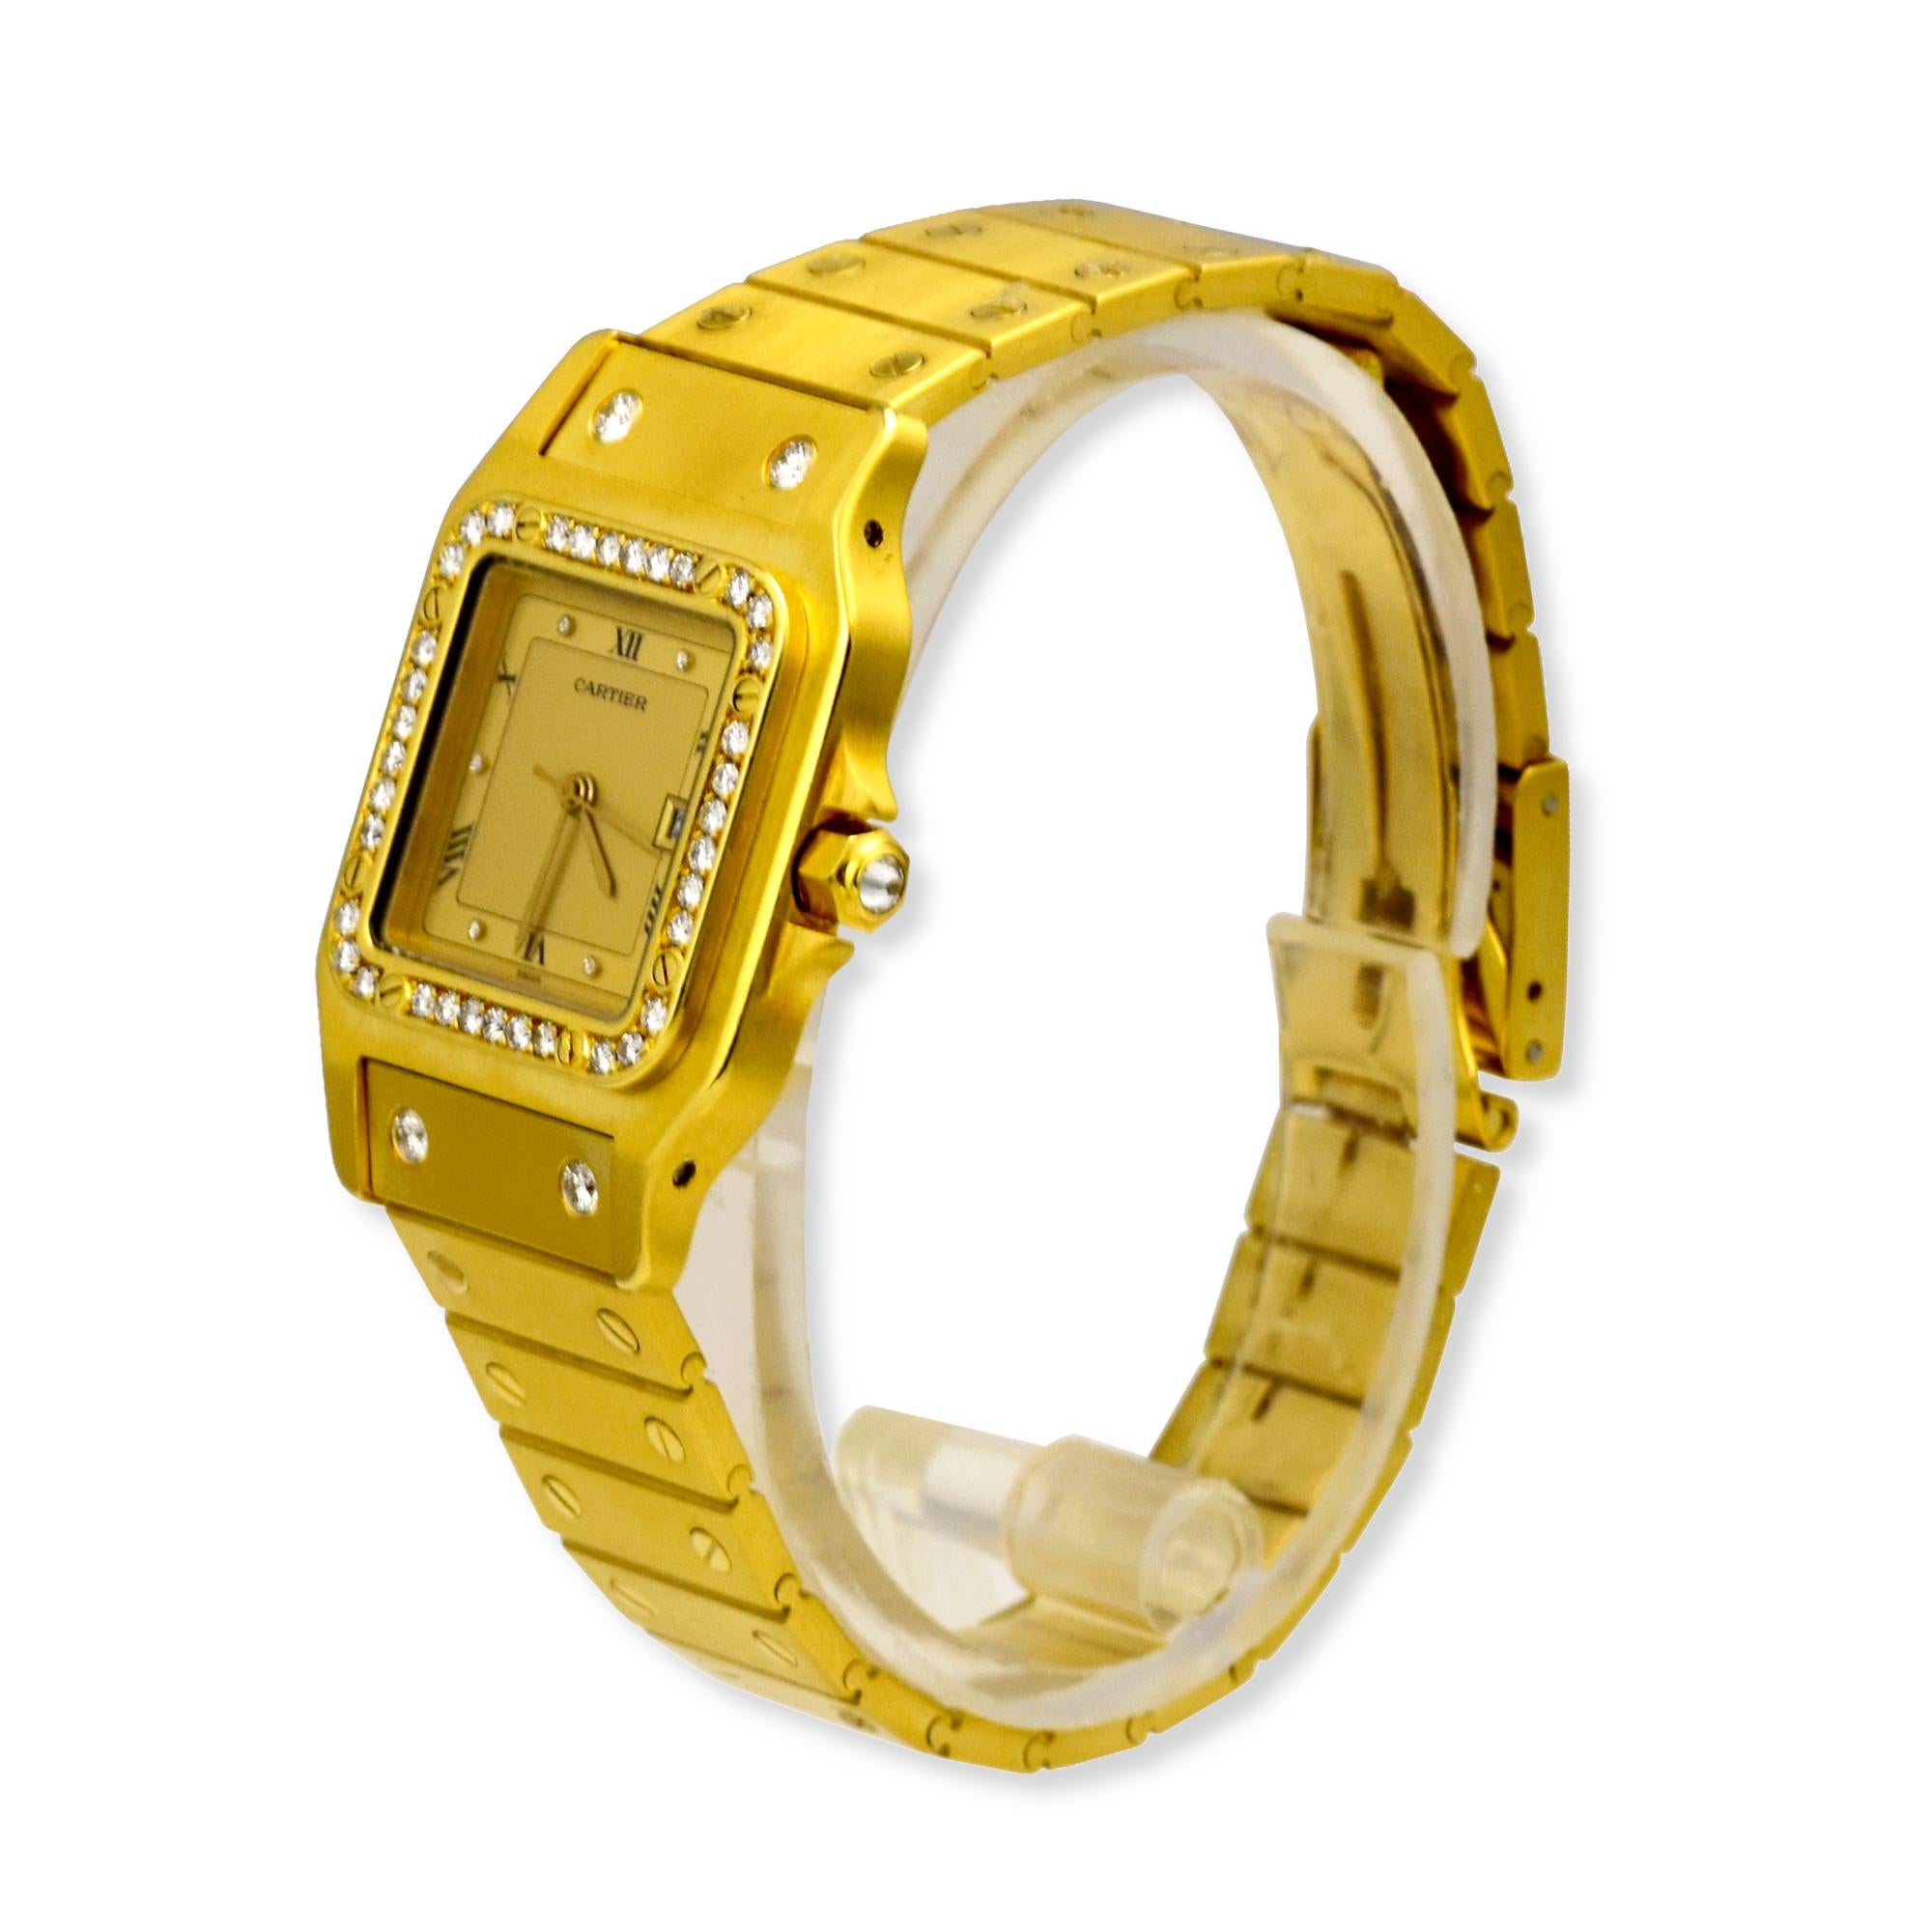 Brand: Cartier

Model: Santos Galbee 

Movement: Automatic 

Case Size: 29 mm

Dial: AM Diamond Hour Marker; Gold; Date Indicator  

Bezel: AM Diamonds 

Case Material: Yellow Gold

Bracelet Material: 18k Yellow Gold 

Crystal: Scratch-Resistant